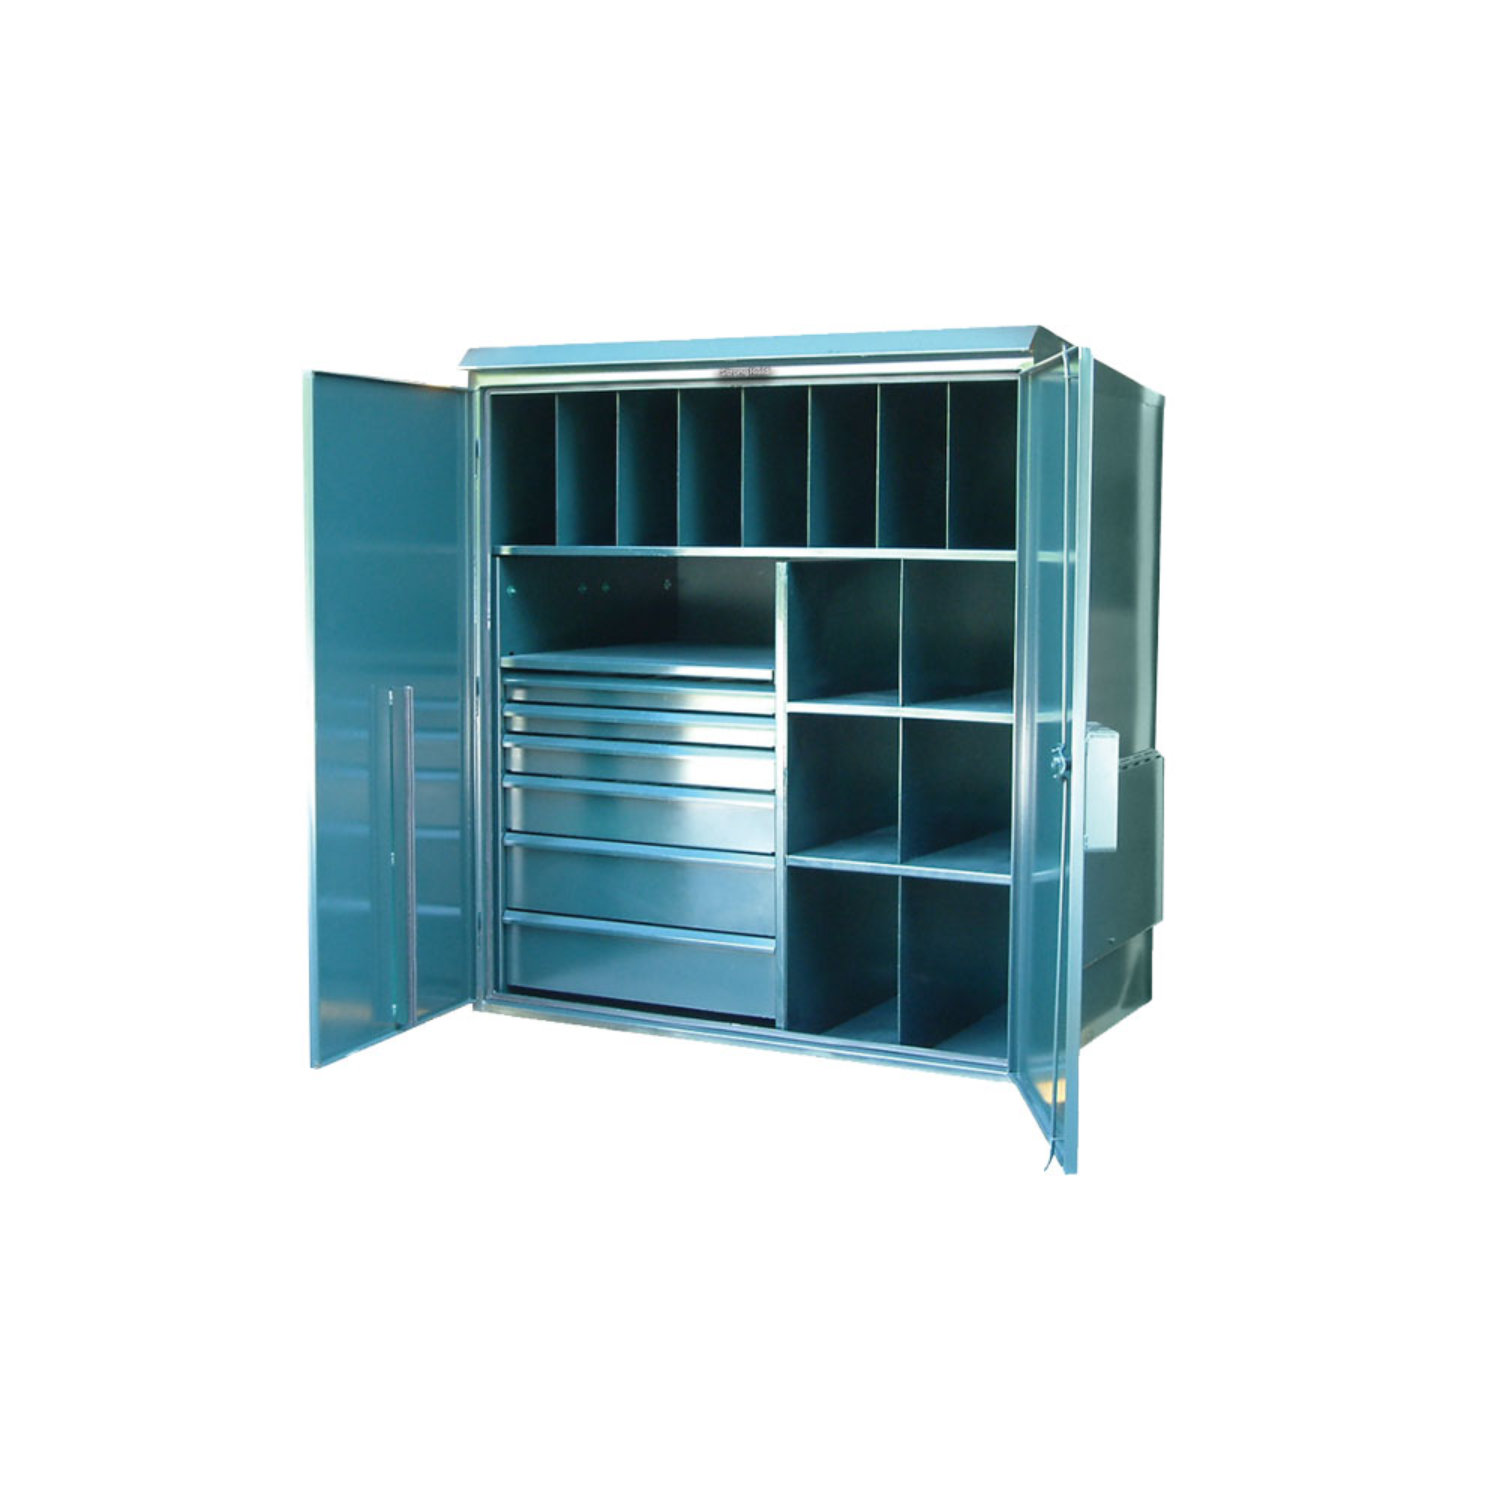 Portside Outdoor Wide Storage Cabinet w/ Shelves